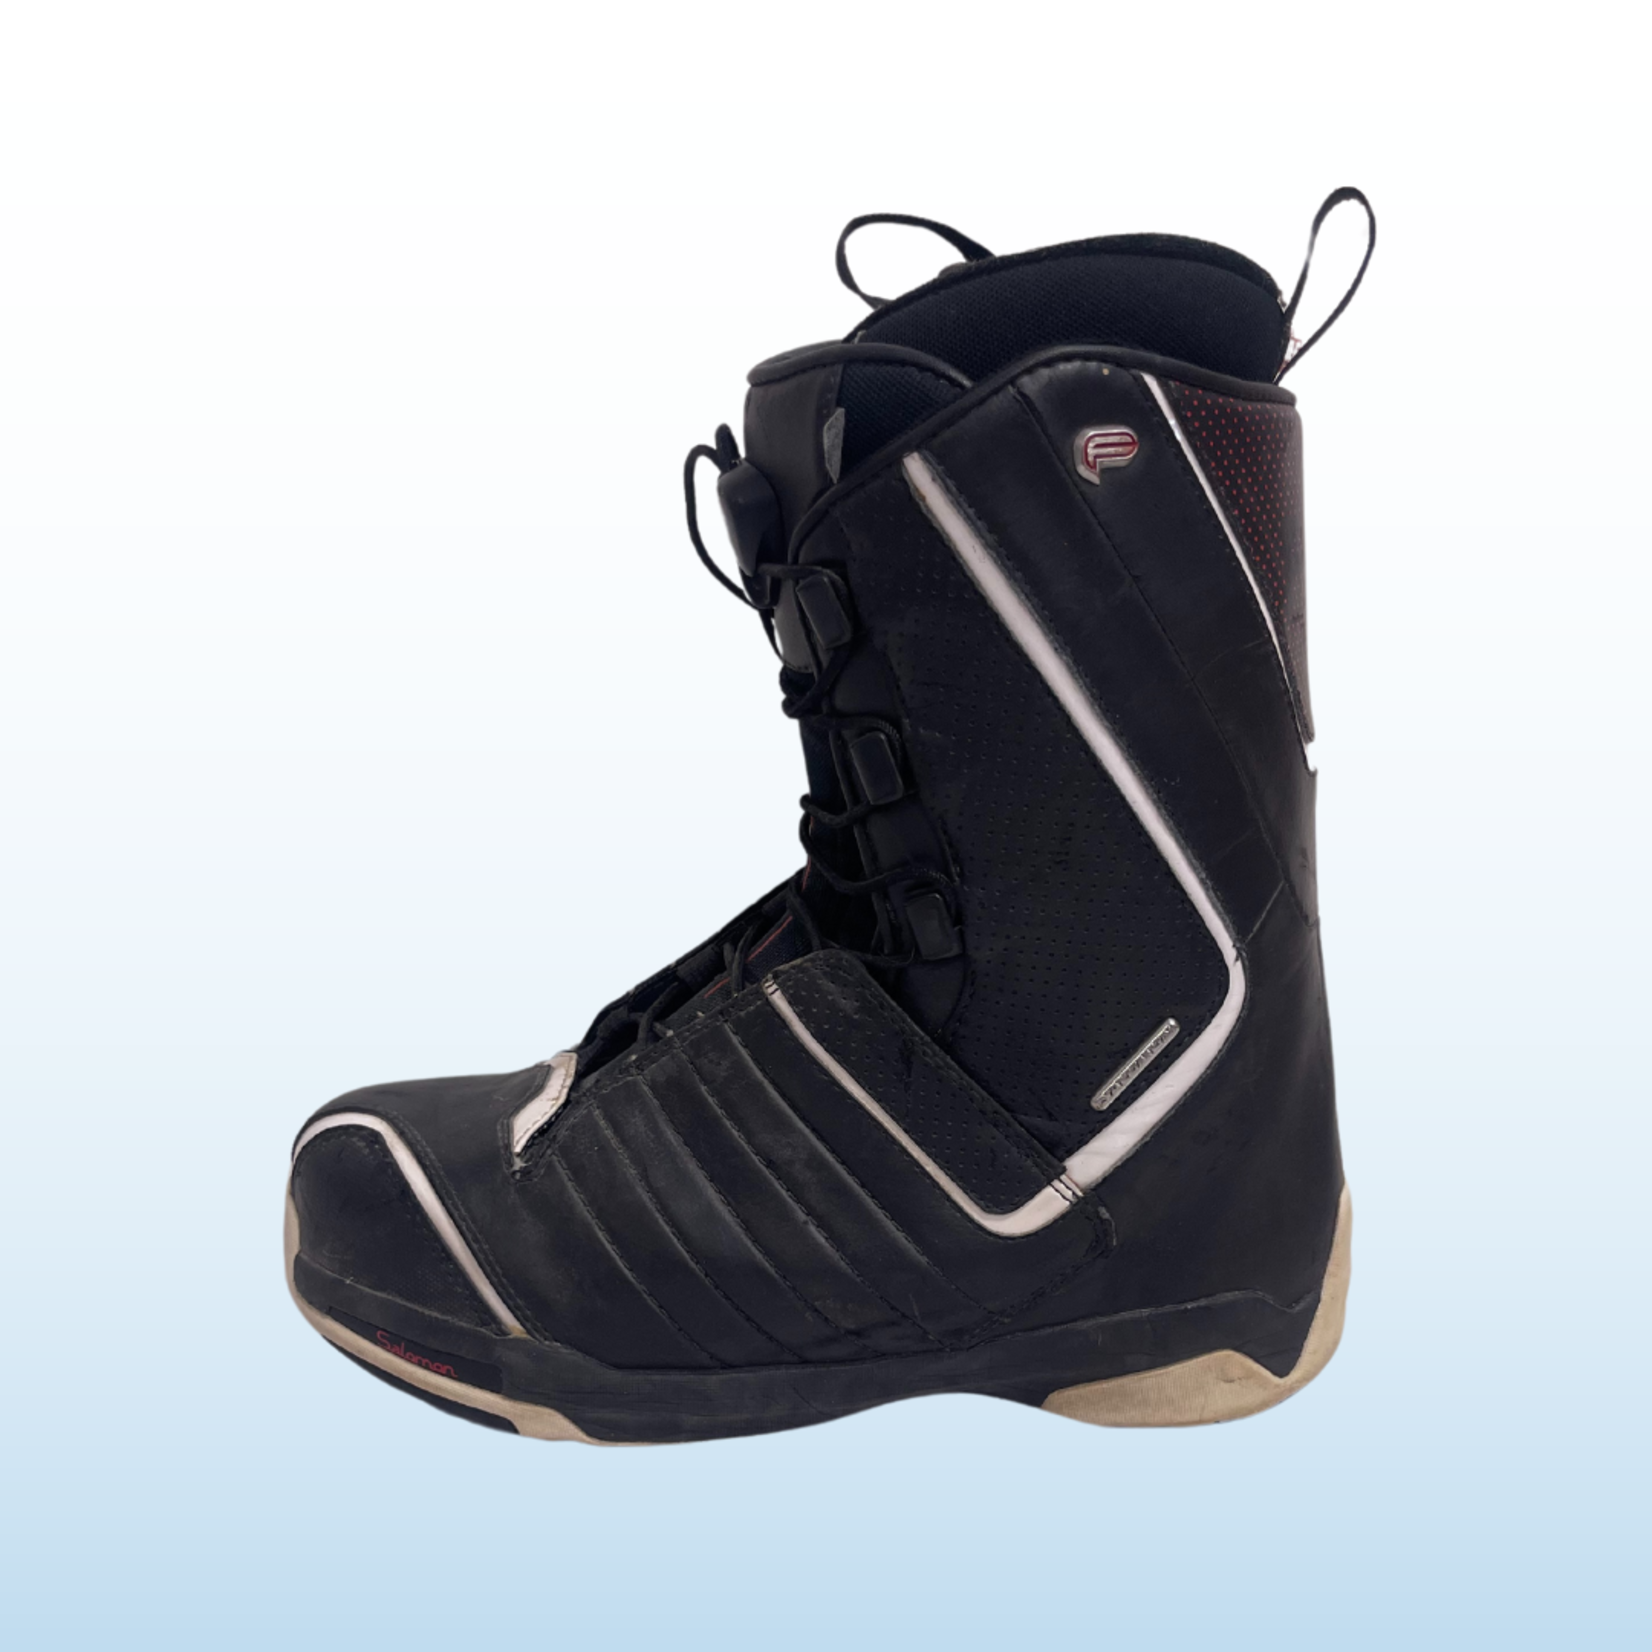 Salomon Used Salomon F20 Snowboard Boots, Size 10.5 MENS